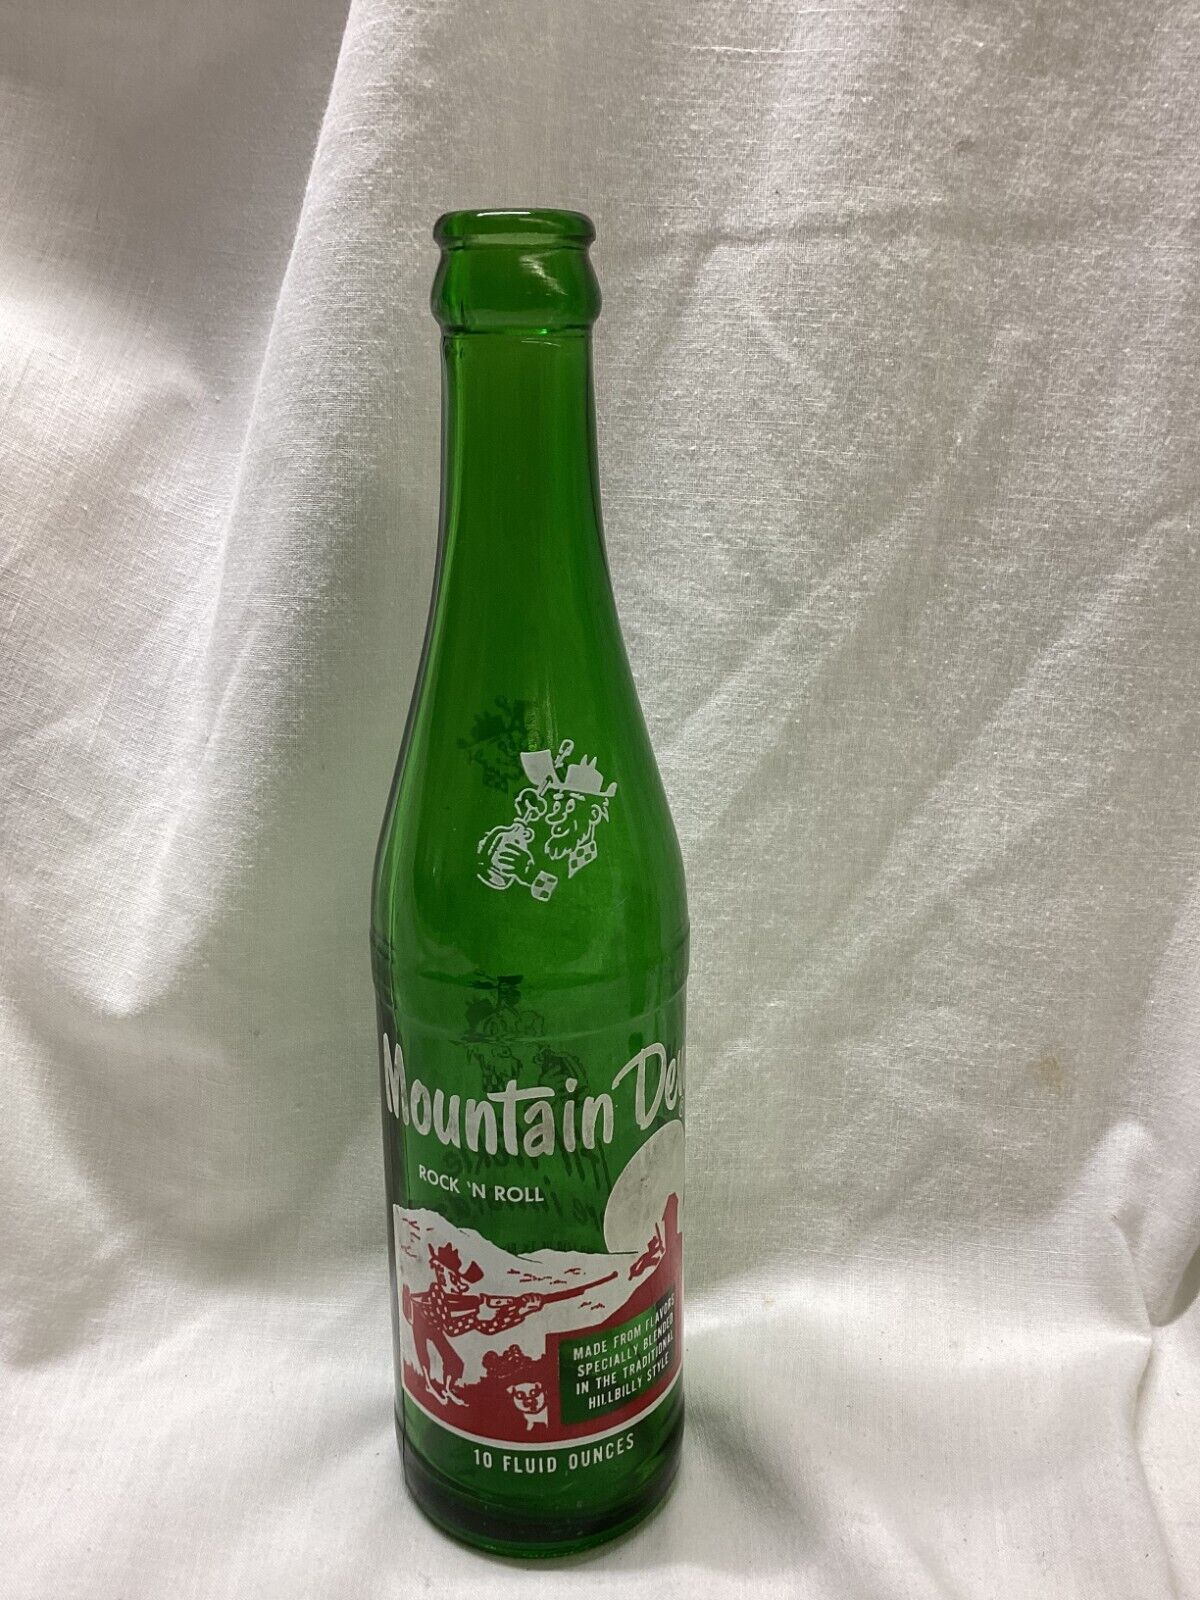 Vintage Hillbilly MOUNTAIN DEW Soda Bottle ROCK 'N ROLL acl painted label